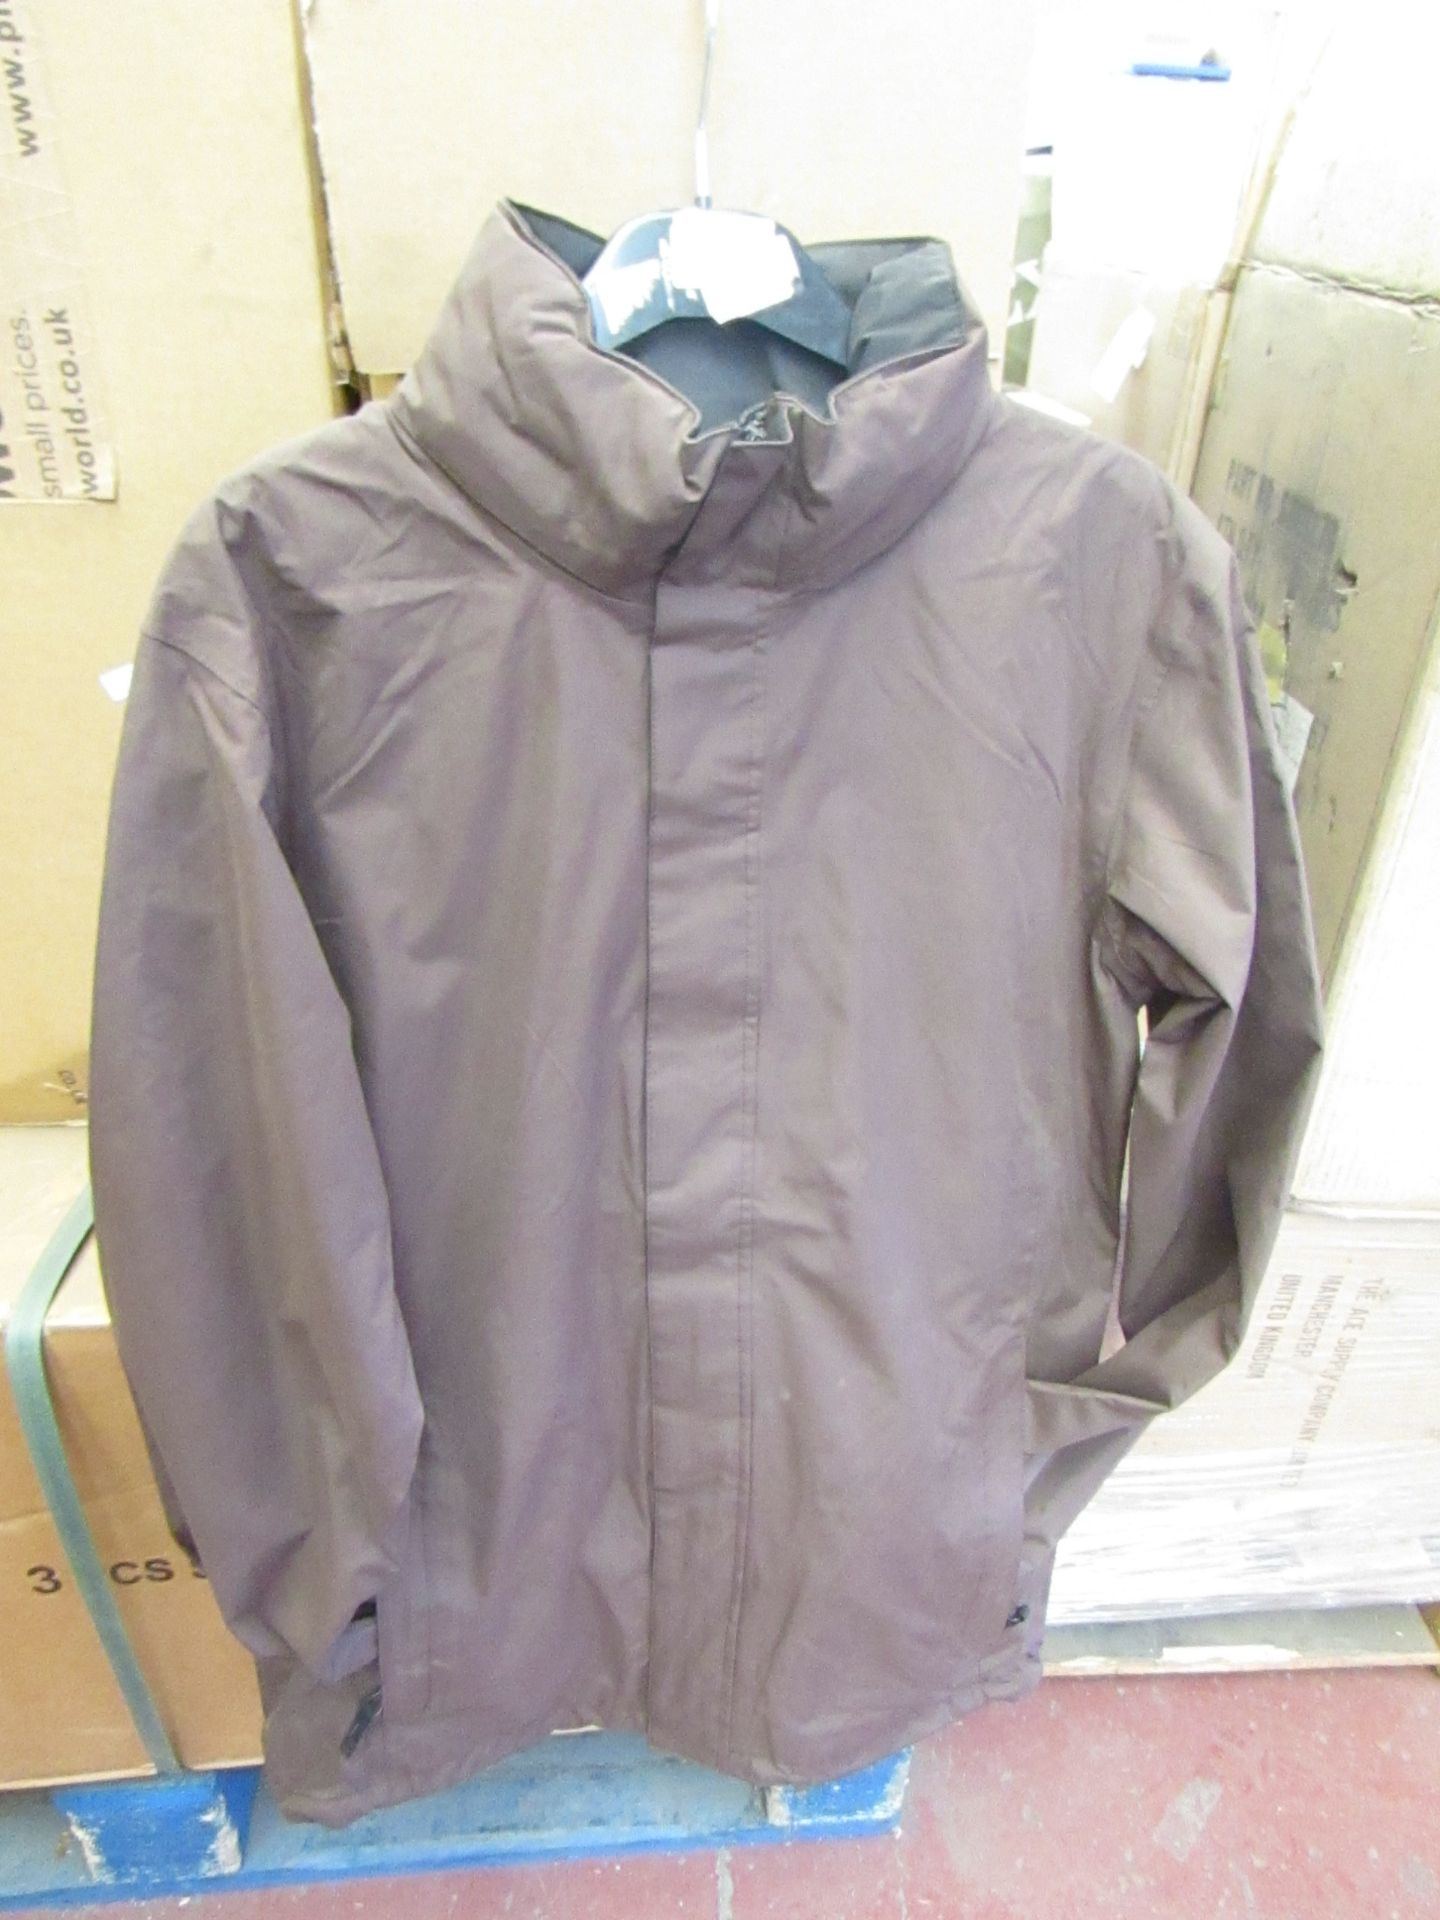 Regatta Hydrafort jacket, size XXL, sneeds a clean.